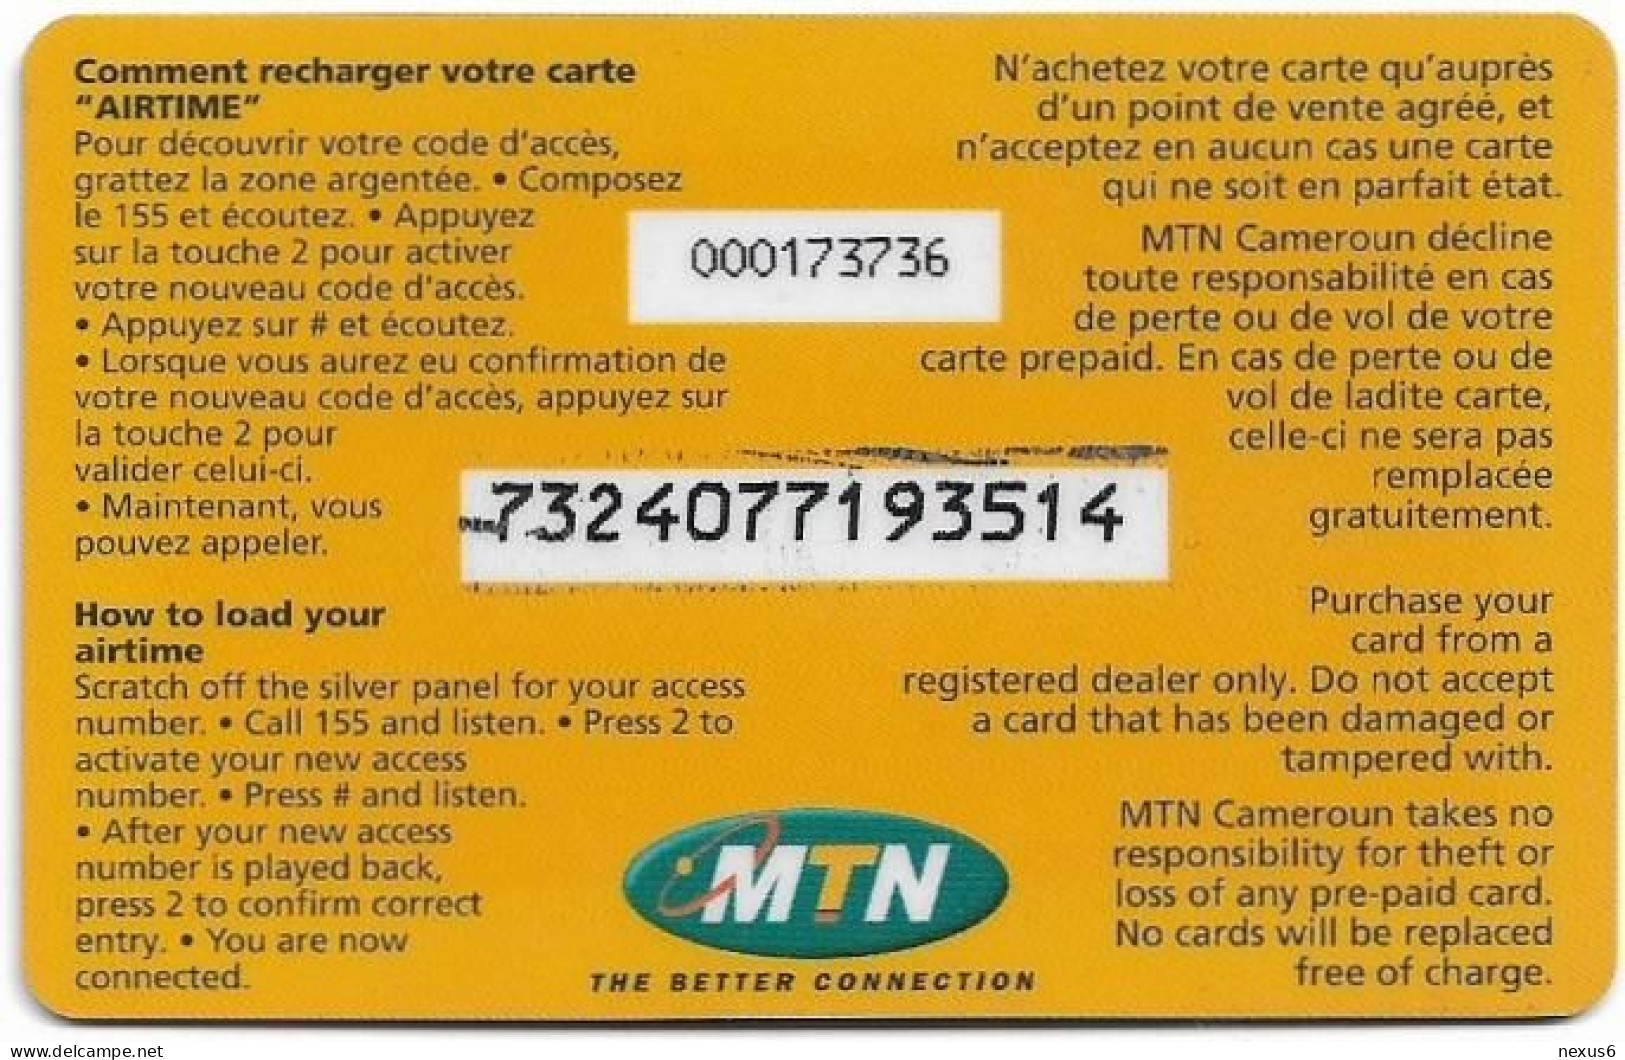 Cameroon - MTN - Airtime ConnectaPlan, GSM Refill 10.000FCFA, Used - Cameroun